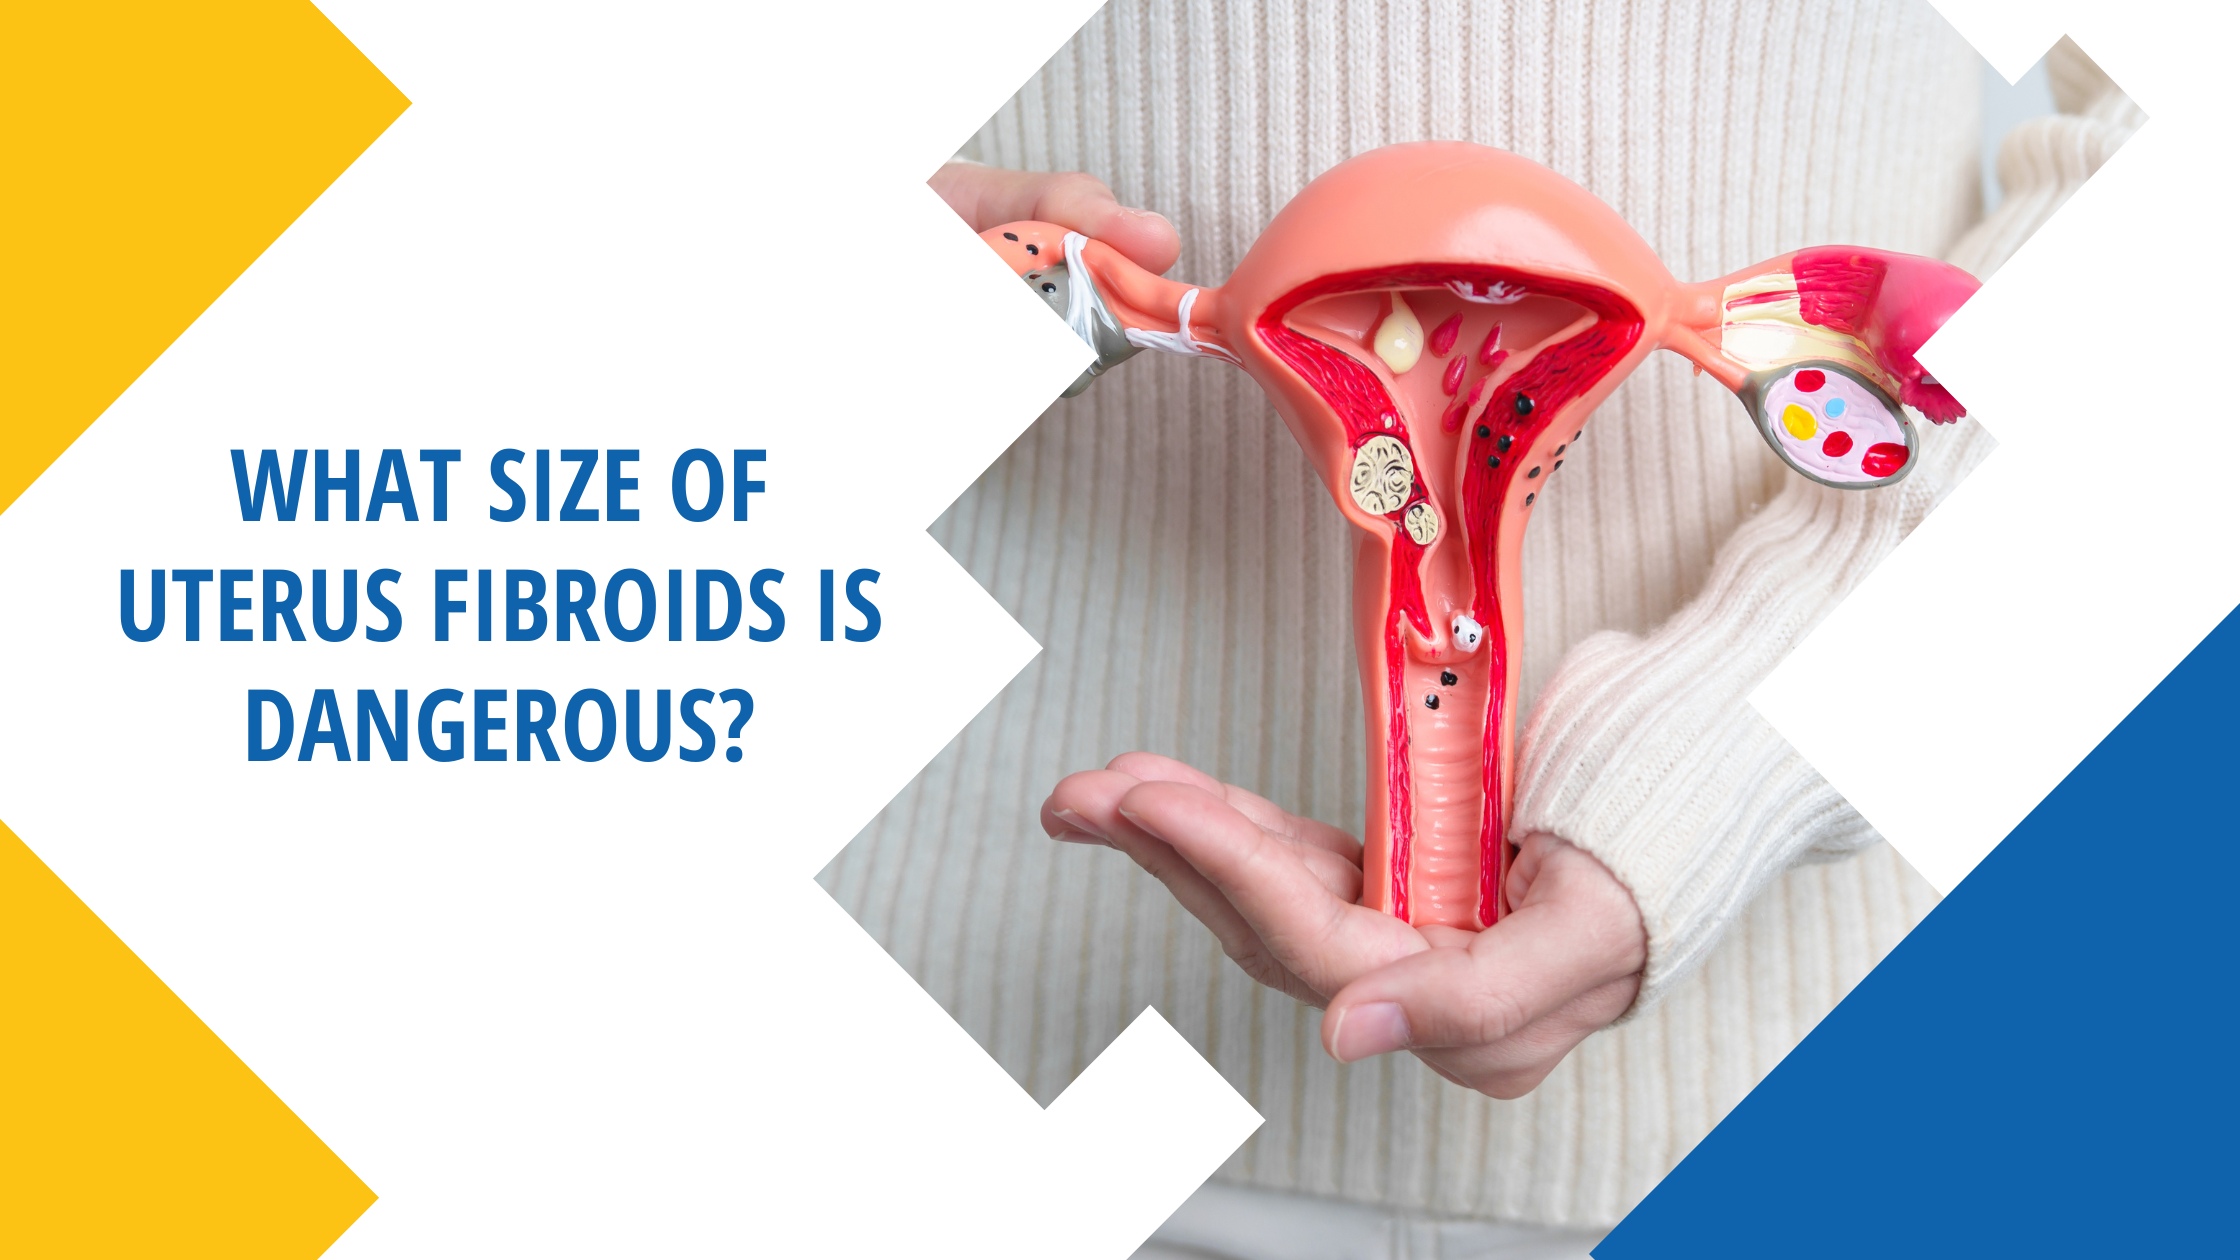 What size of Uterus Fibroids is dangerous